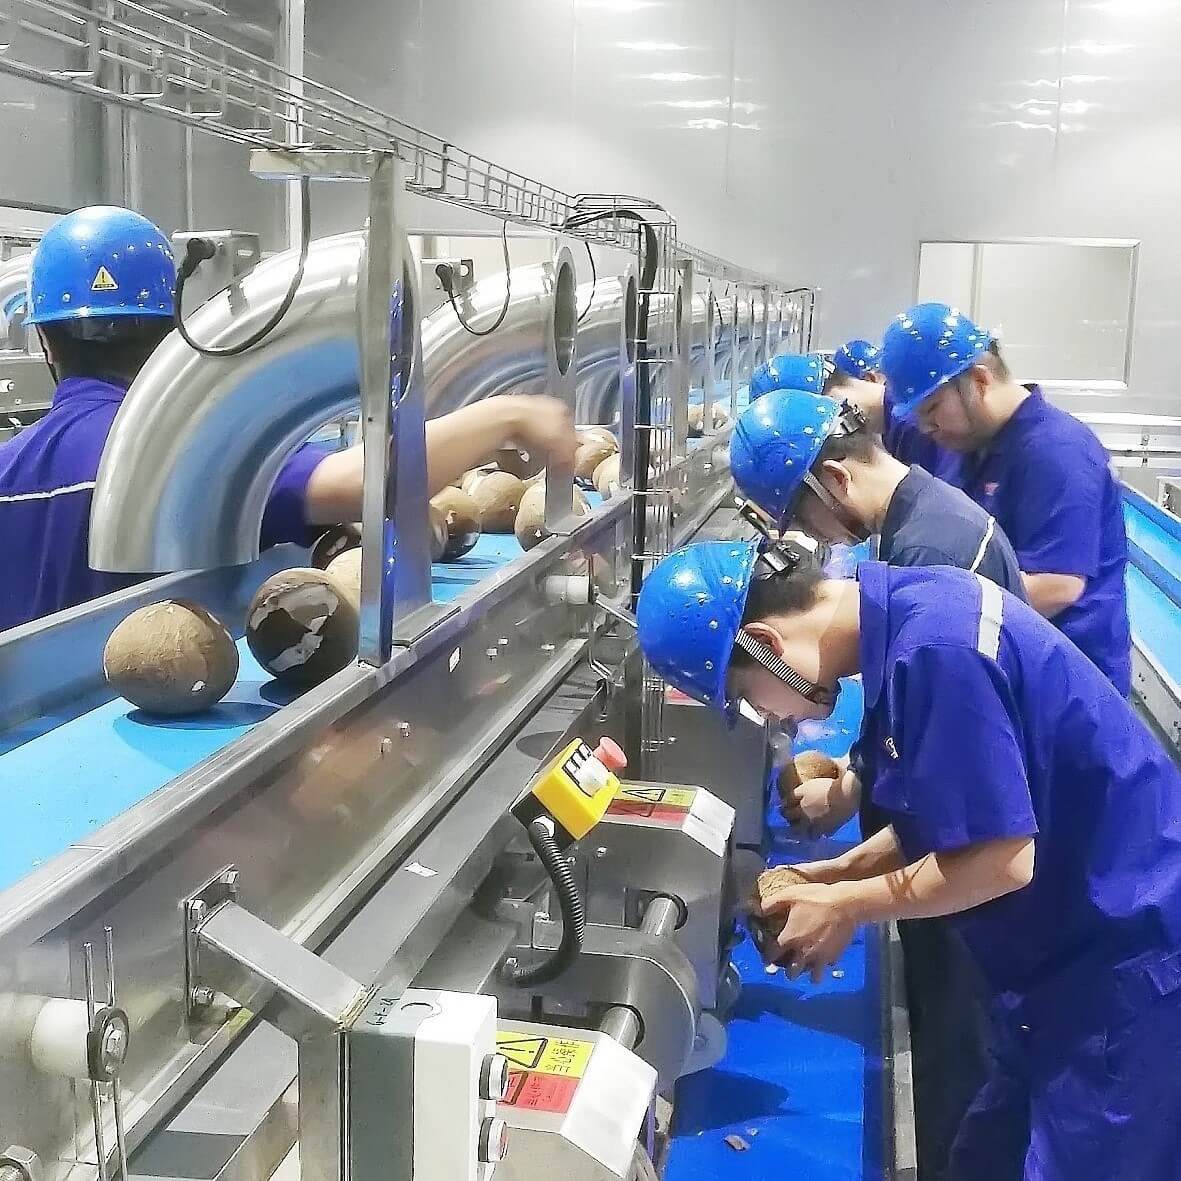 Coconut processing line